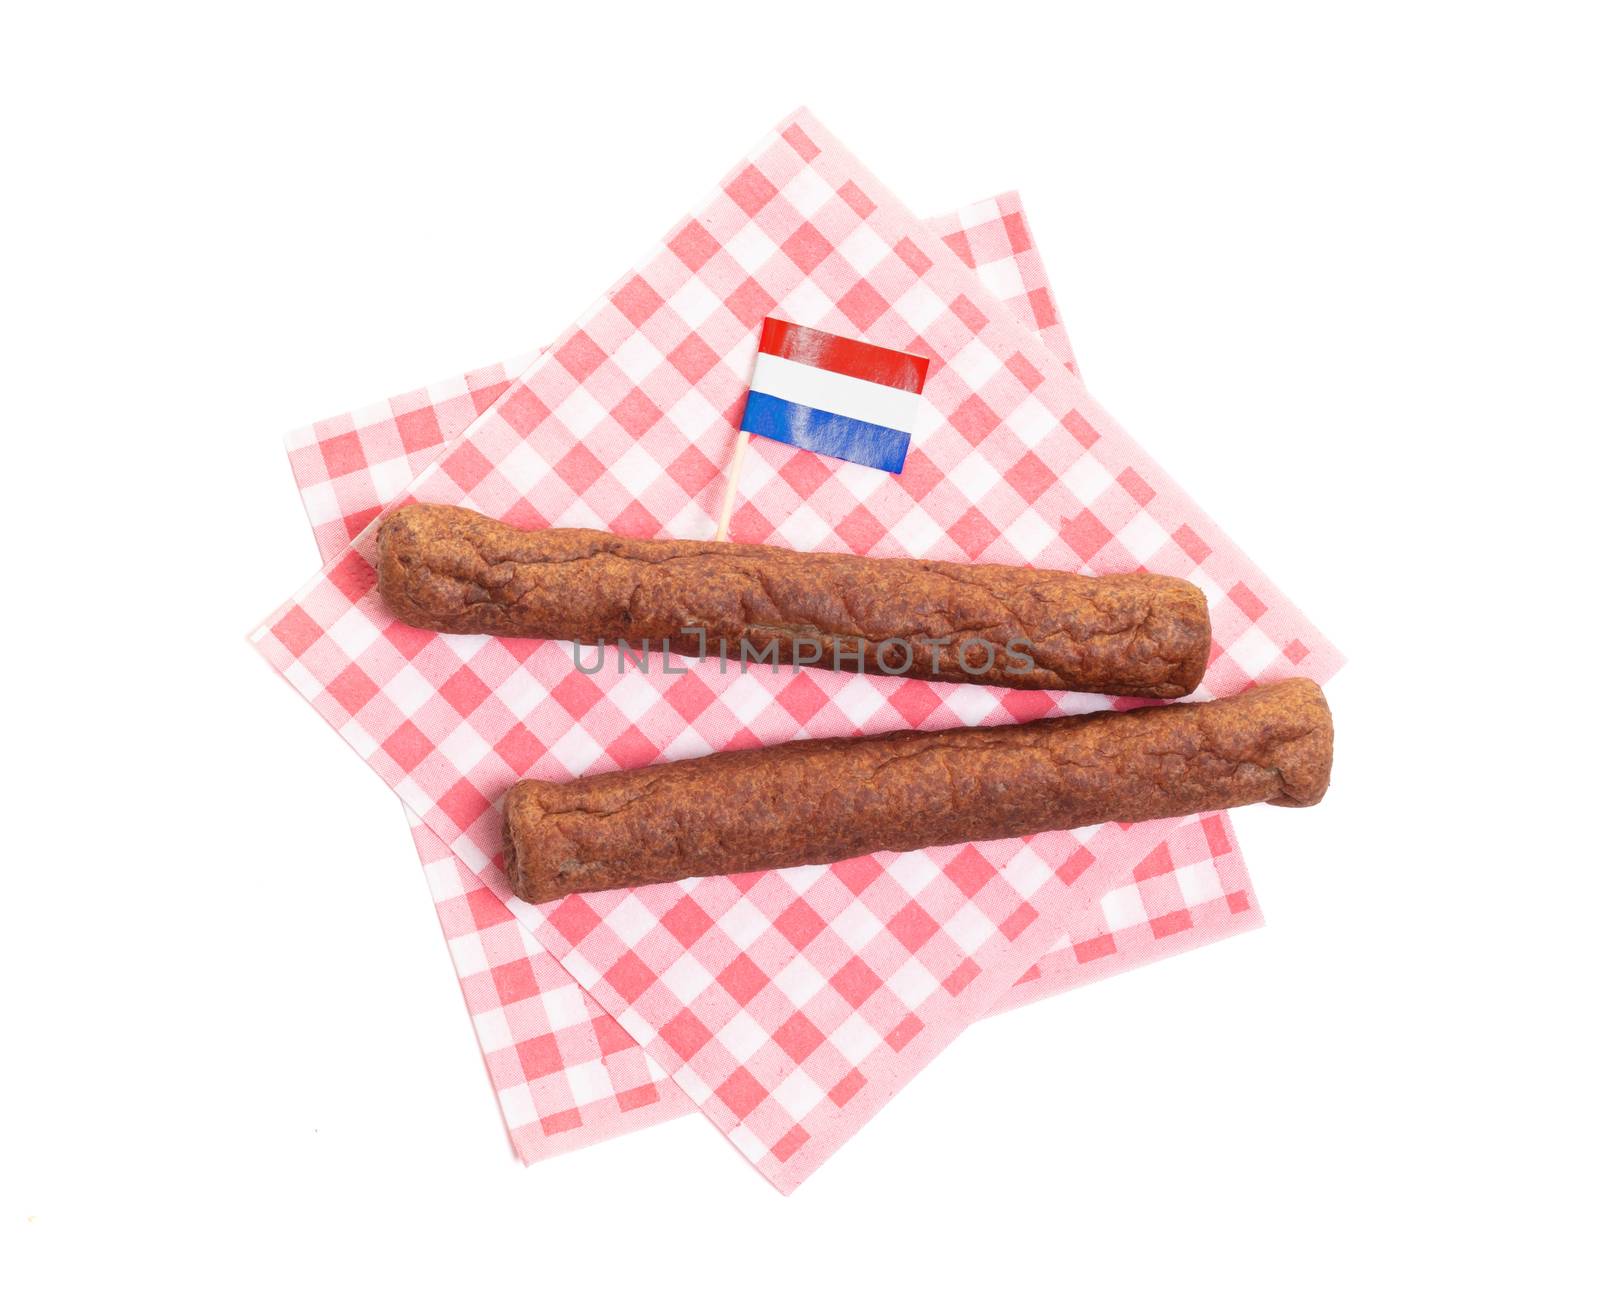 Two frikadellen on a napkin, a Dutch fast food snack by michaklootwijk